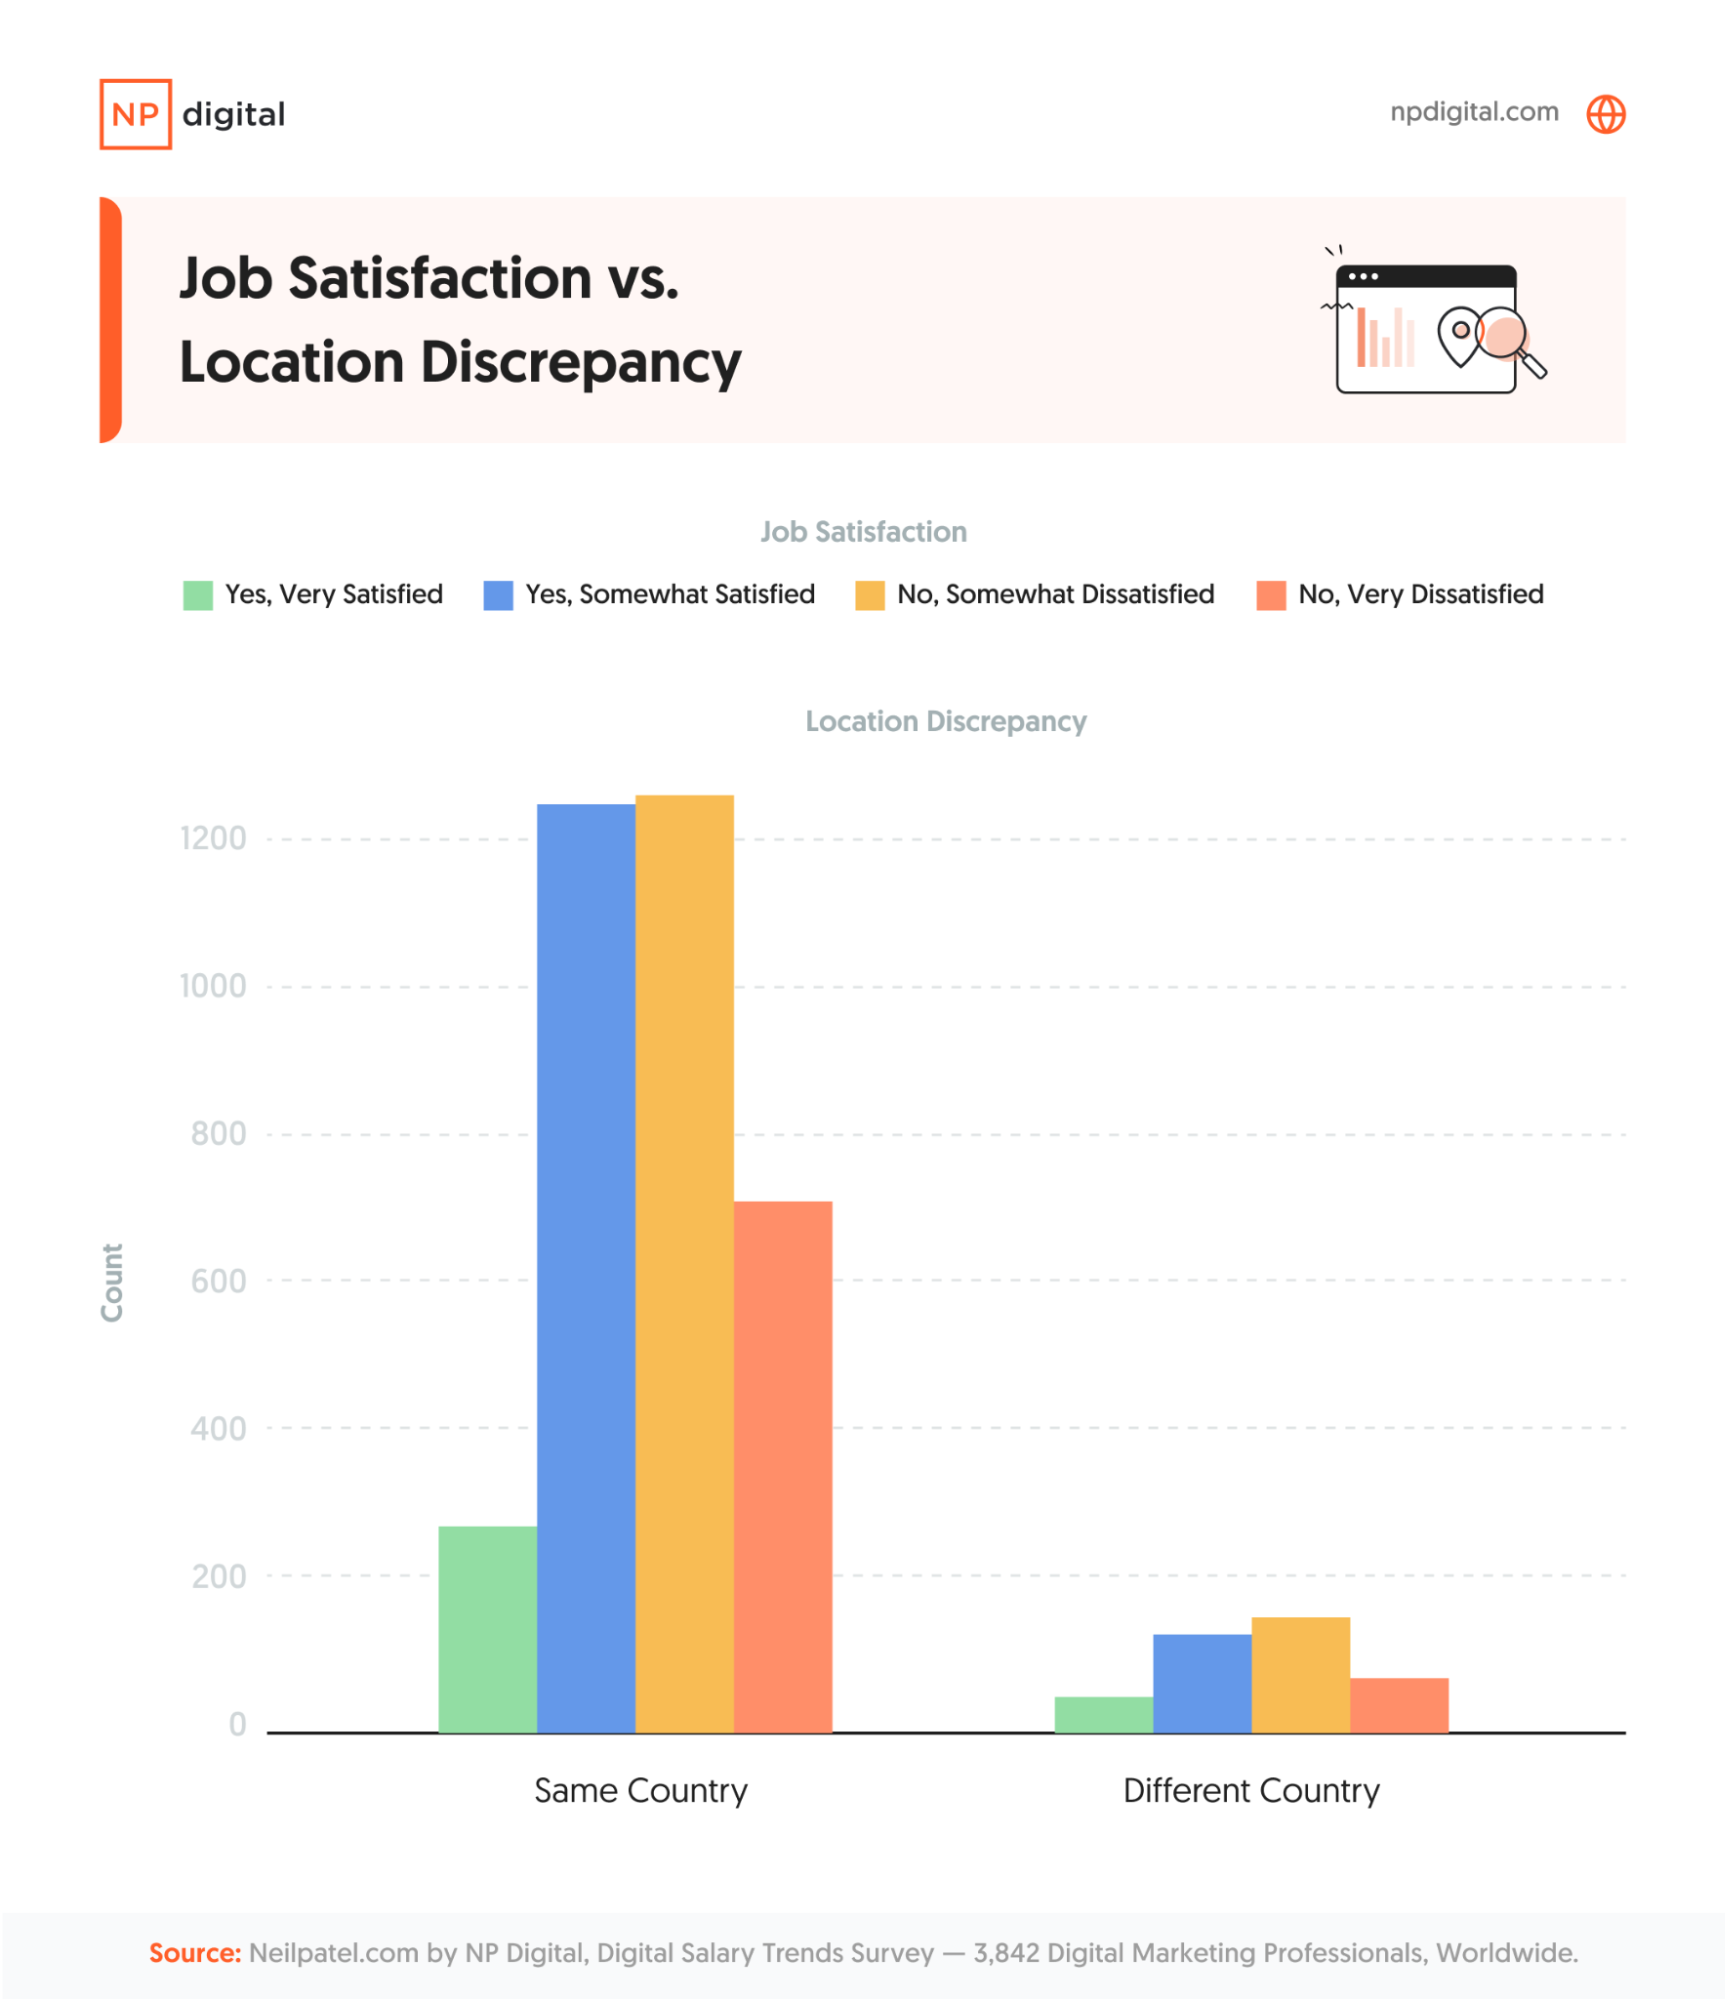 Bar chart showing job satisfaction vs. location discrepancy